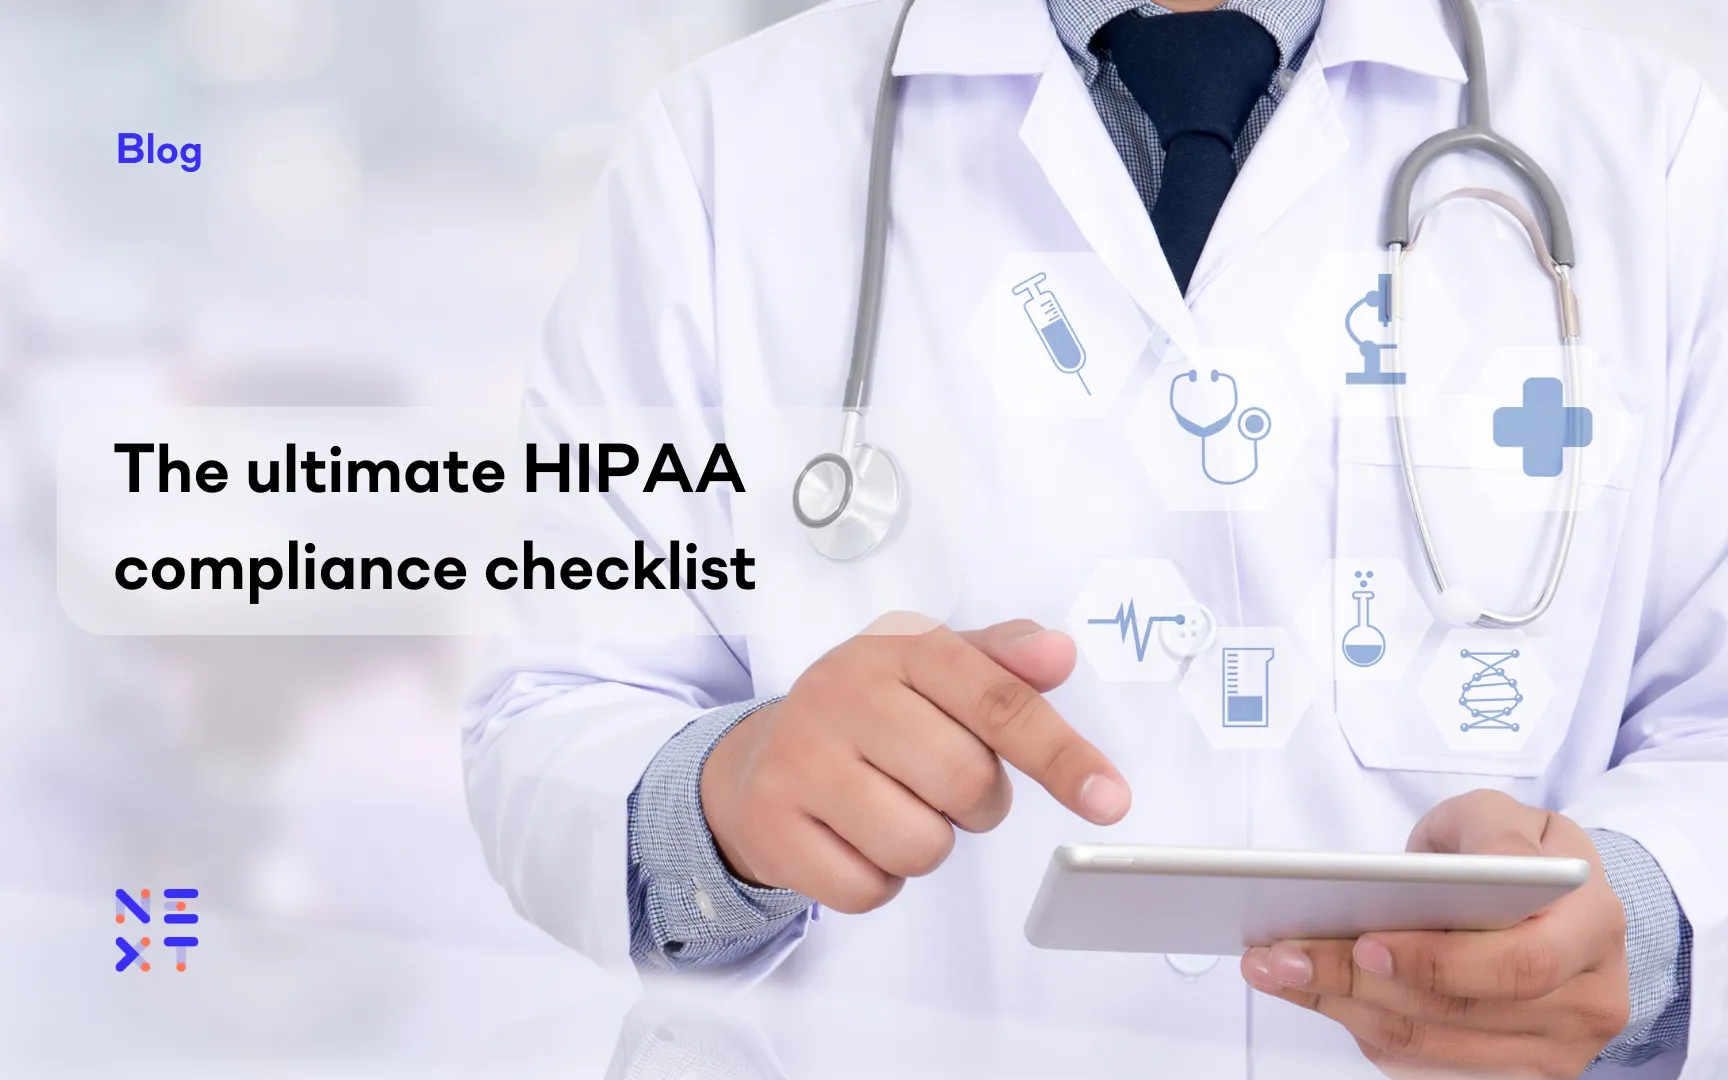 The ultimate HIPAA compliance checklist